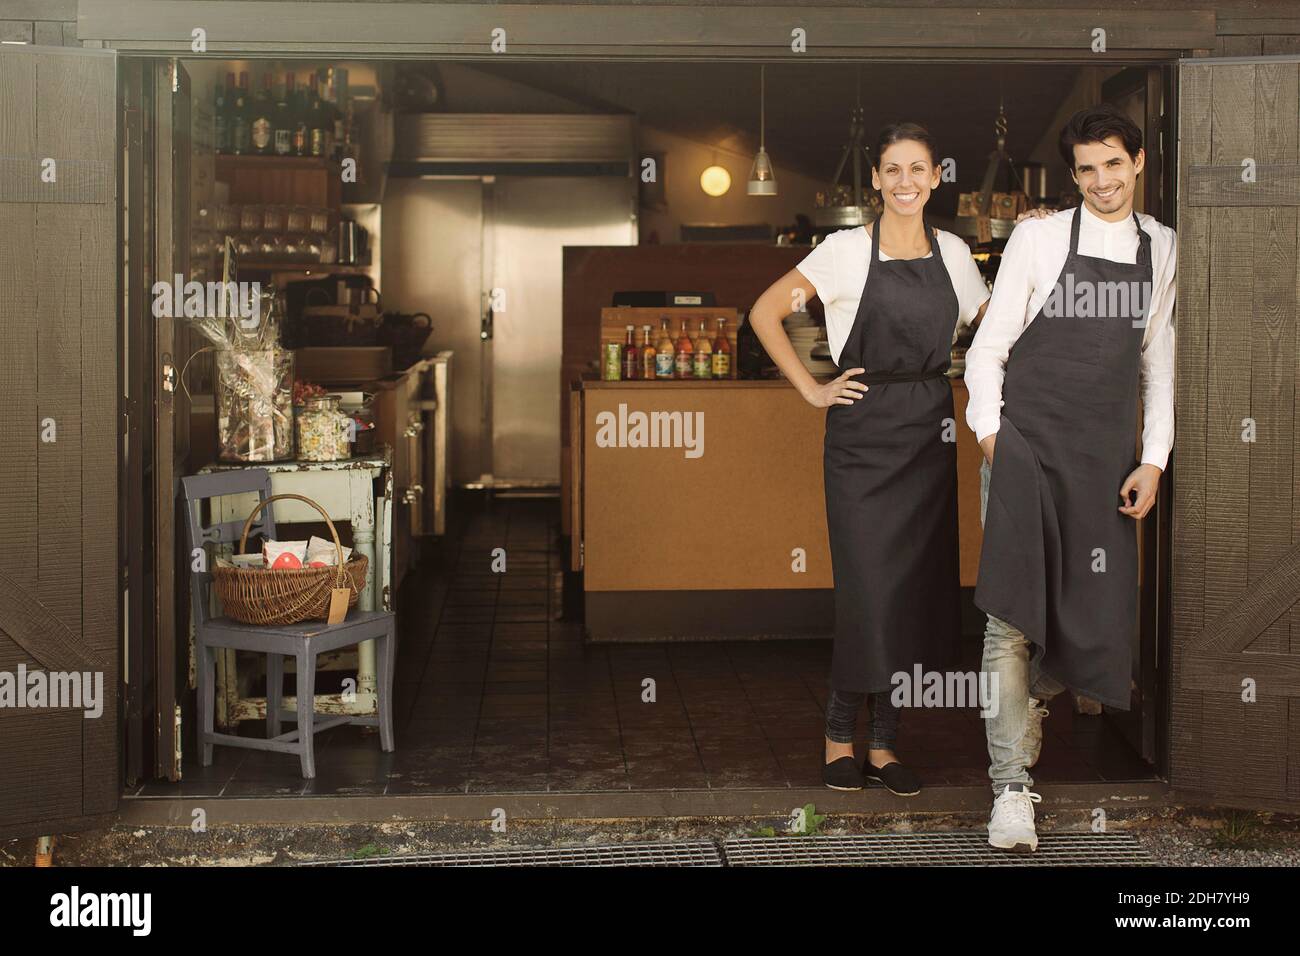 Full length portrait of smiling owners standing outside restaurant Stock Photo